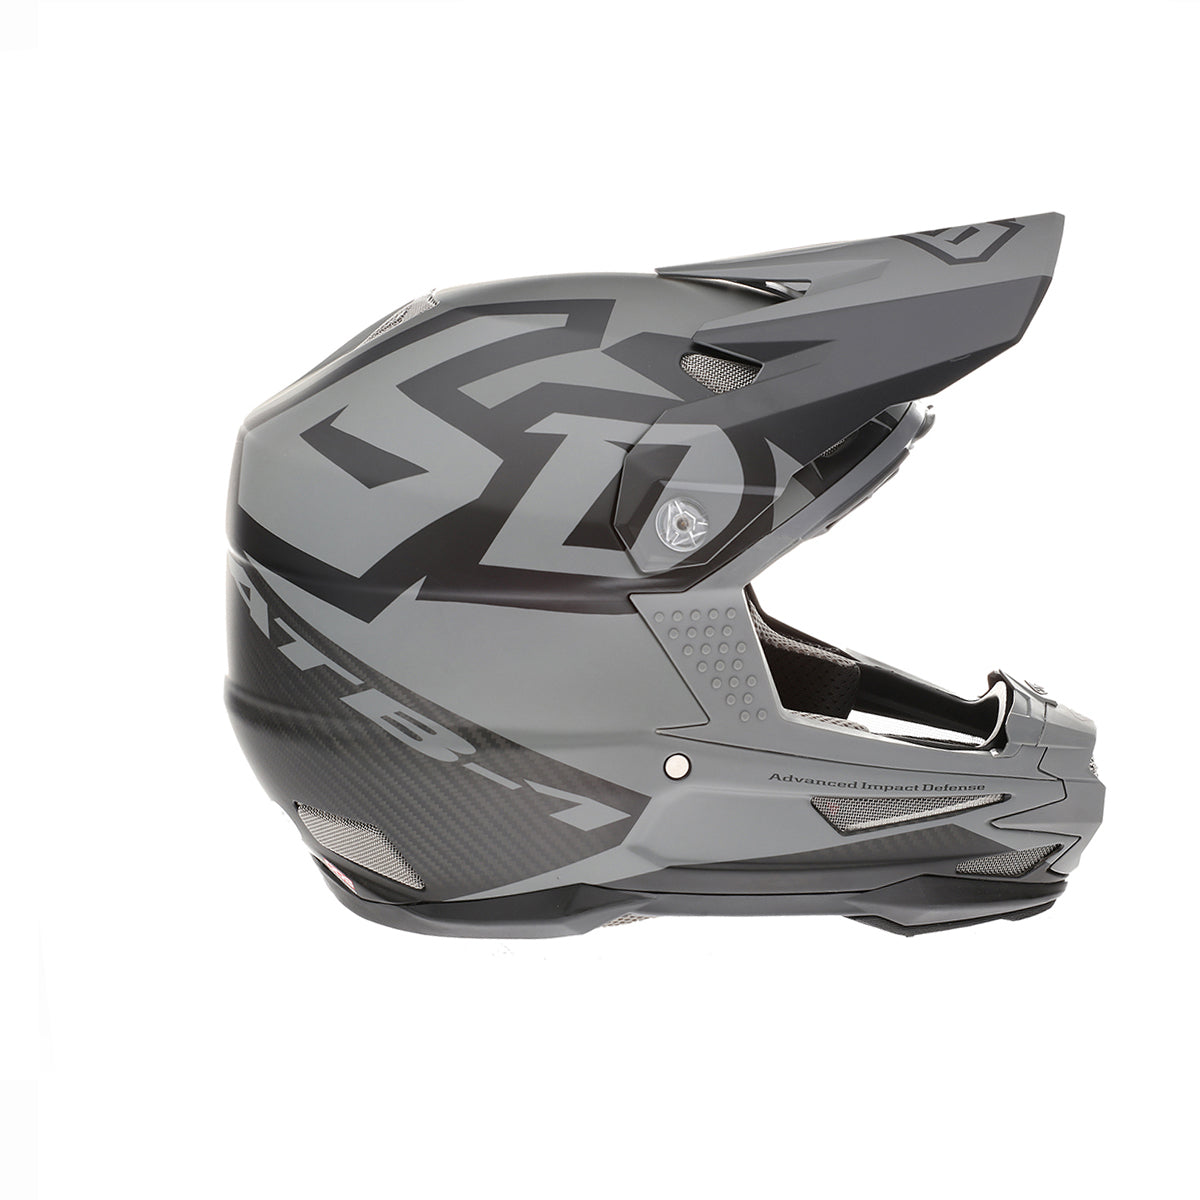 Bike – 6D Helmets Europe